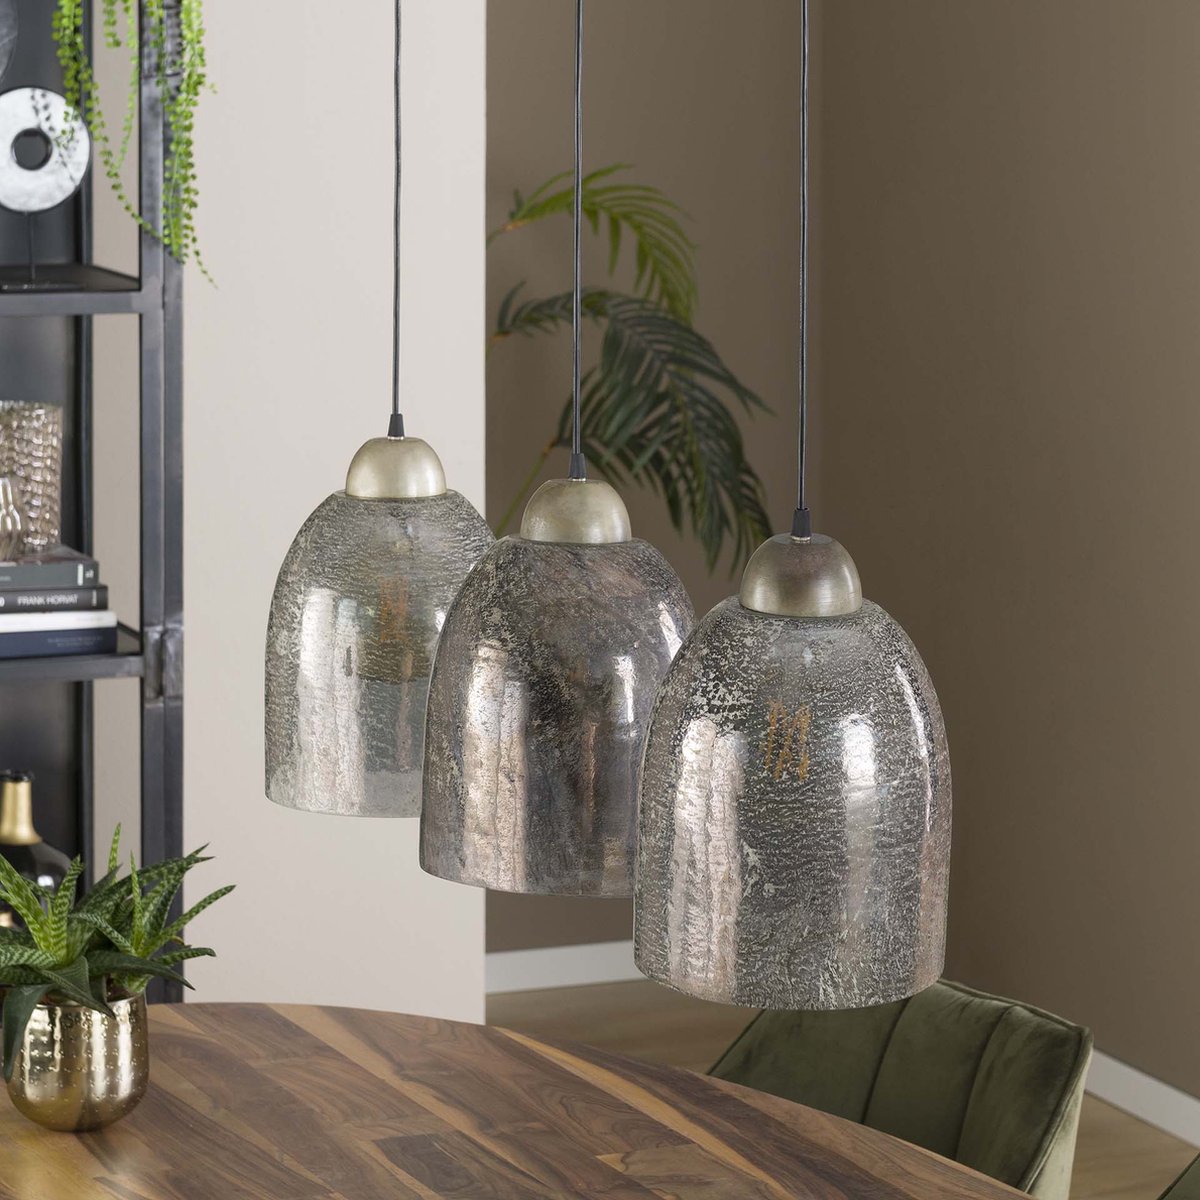 Hanglamp Stone Glass sphere | 3 lichts | grijs / oud zilver | glas / metaal | eetkamer / eettafel lamp | 90 cm balk | in hoogte verstelbaar tot 150 cm | modern / sfeervol design